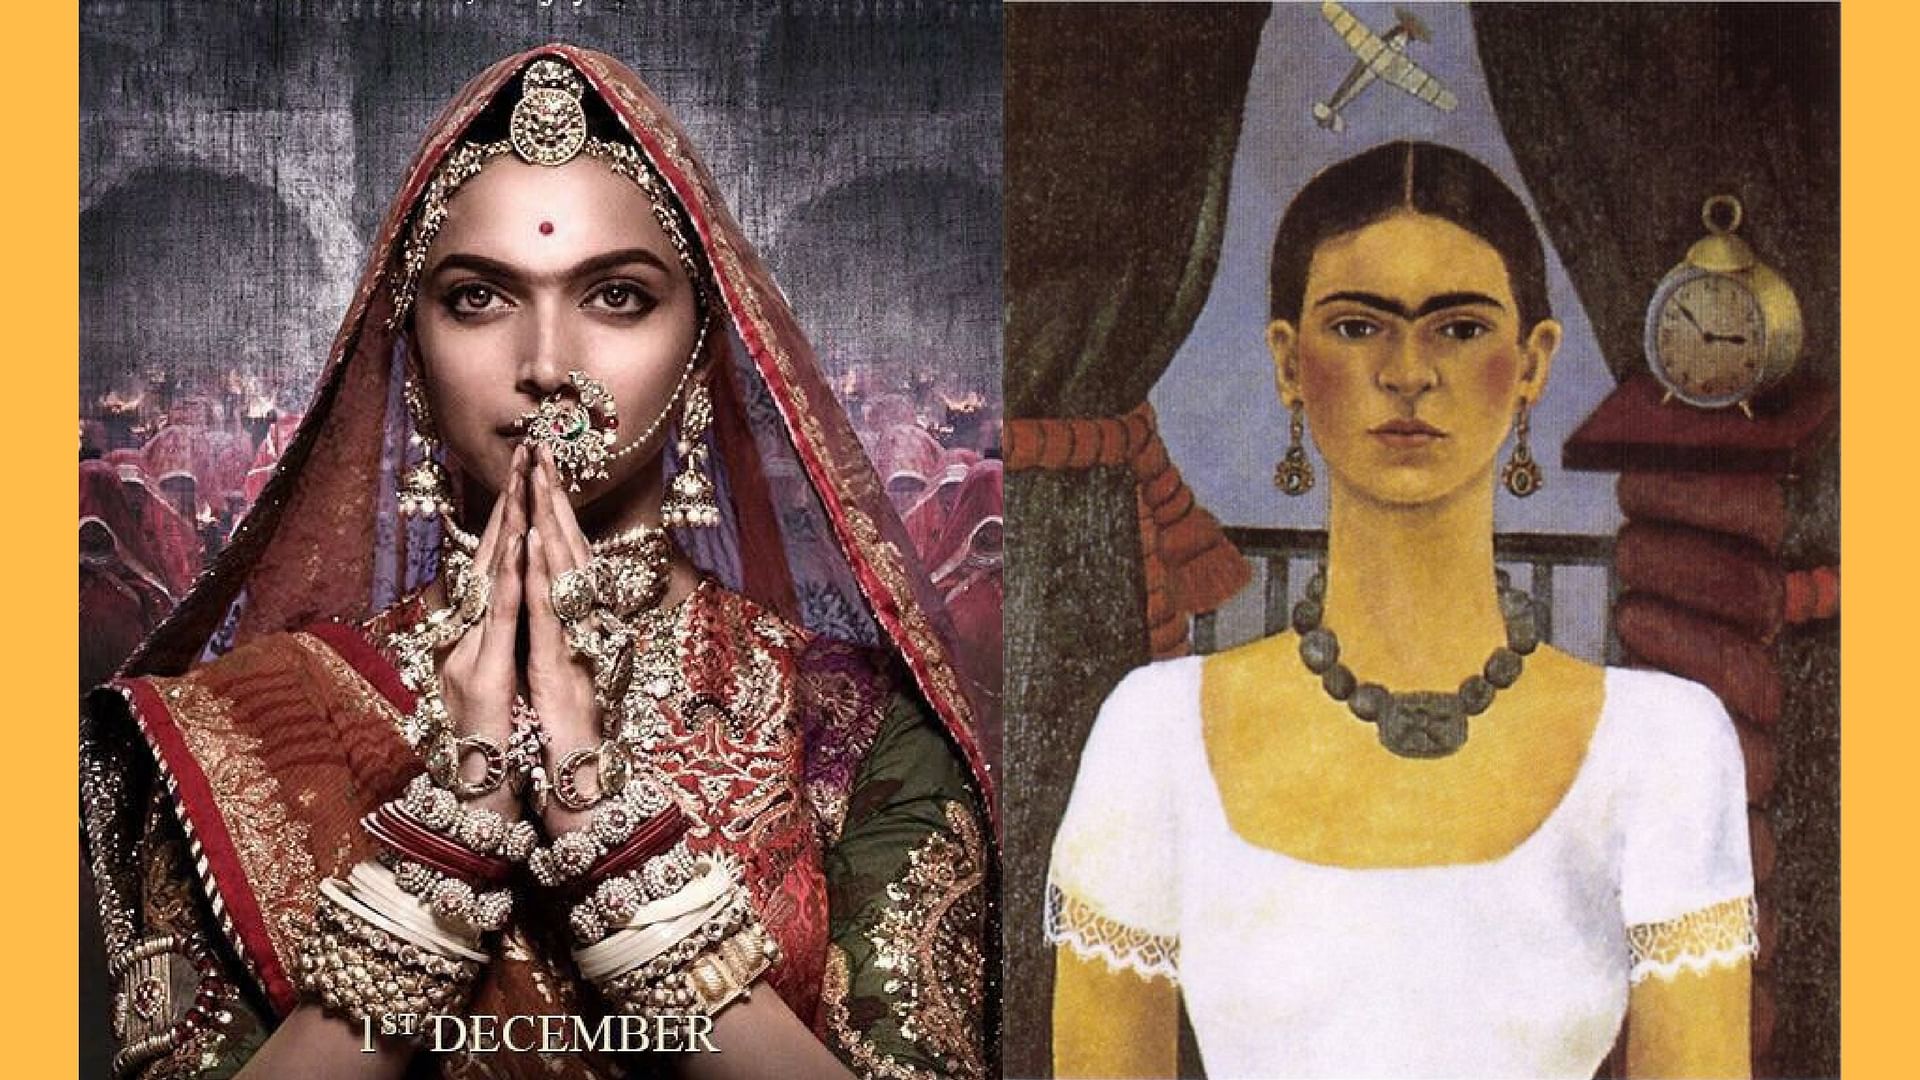 Deepika Padukone’s <i>Padmavati </i>look has got people tweeting out GIFs of Frida Kahlo.